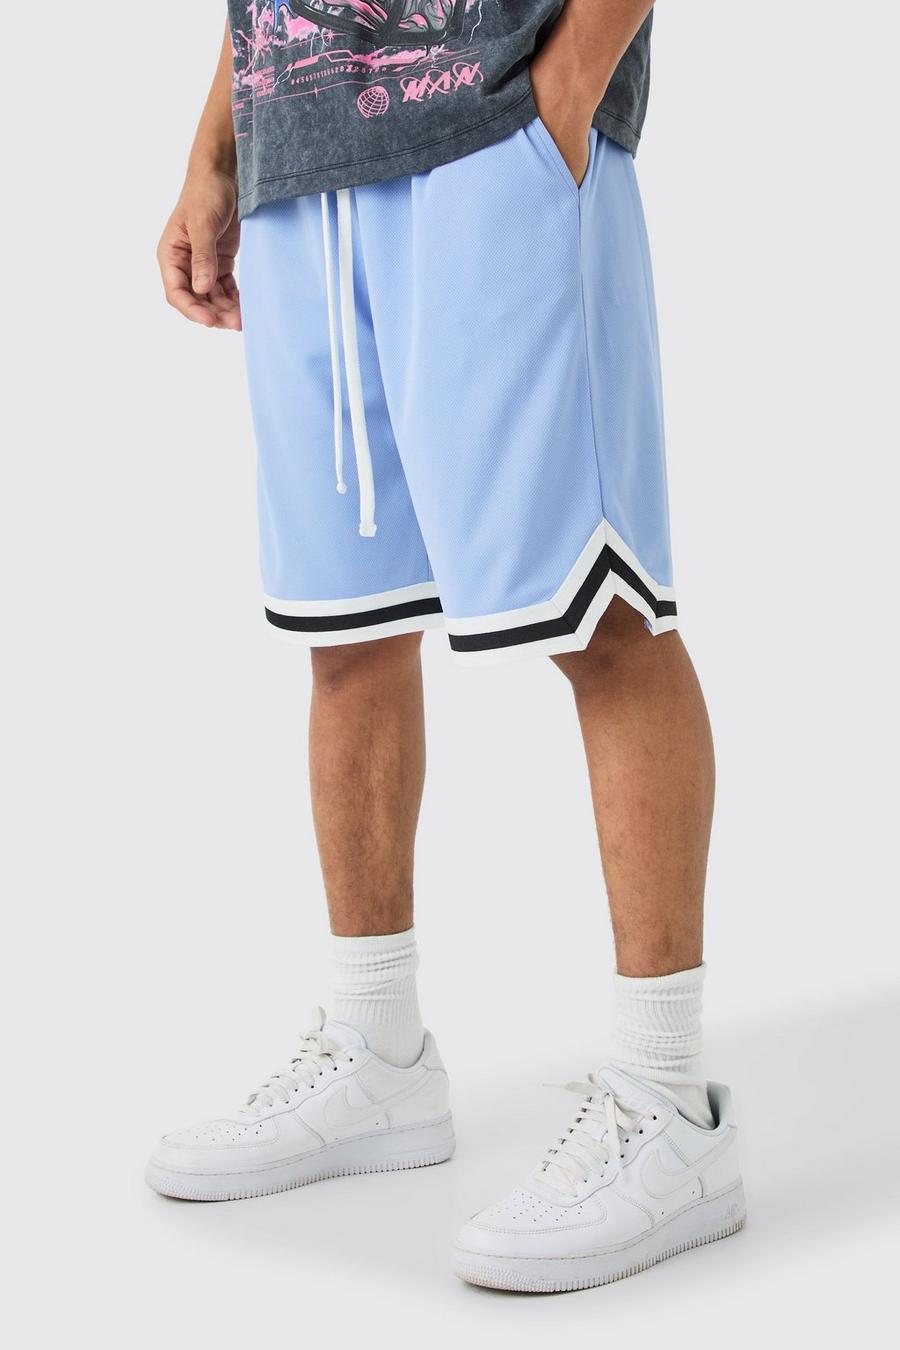 Pantalón corto holgado de malla estilo baloncesto, Blue image number 1